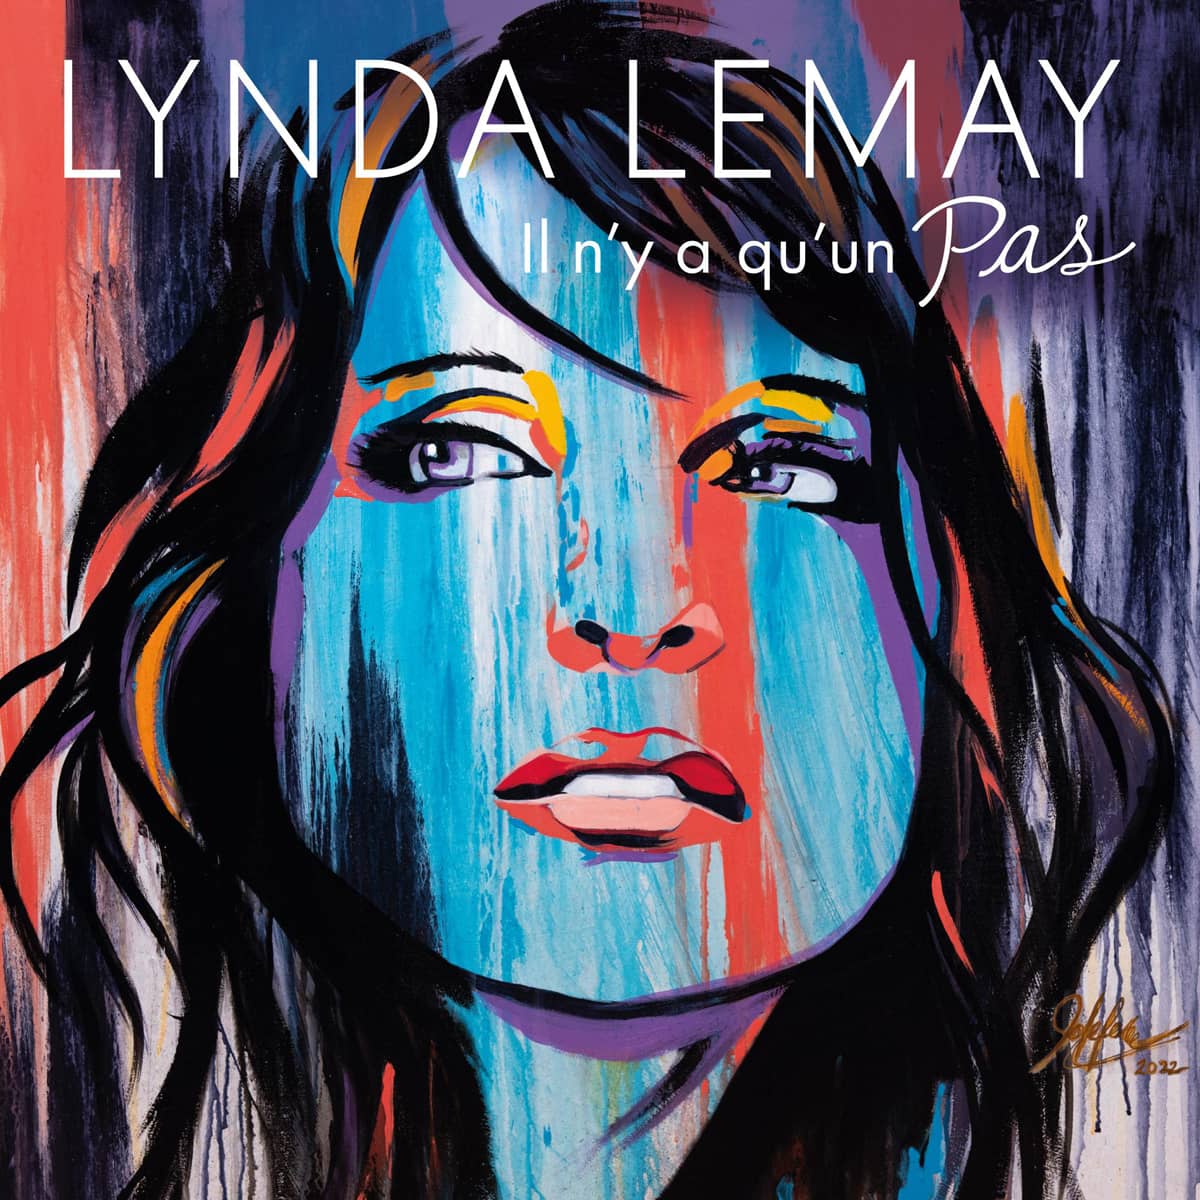 Il N Y A Qu Un Pas Lynda Lemay Cd Album